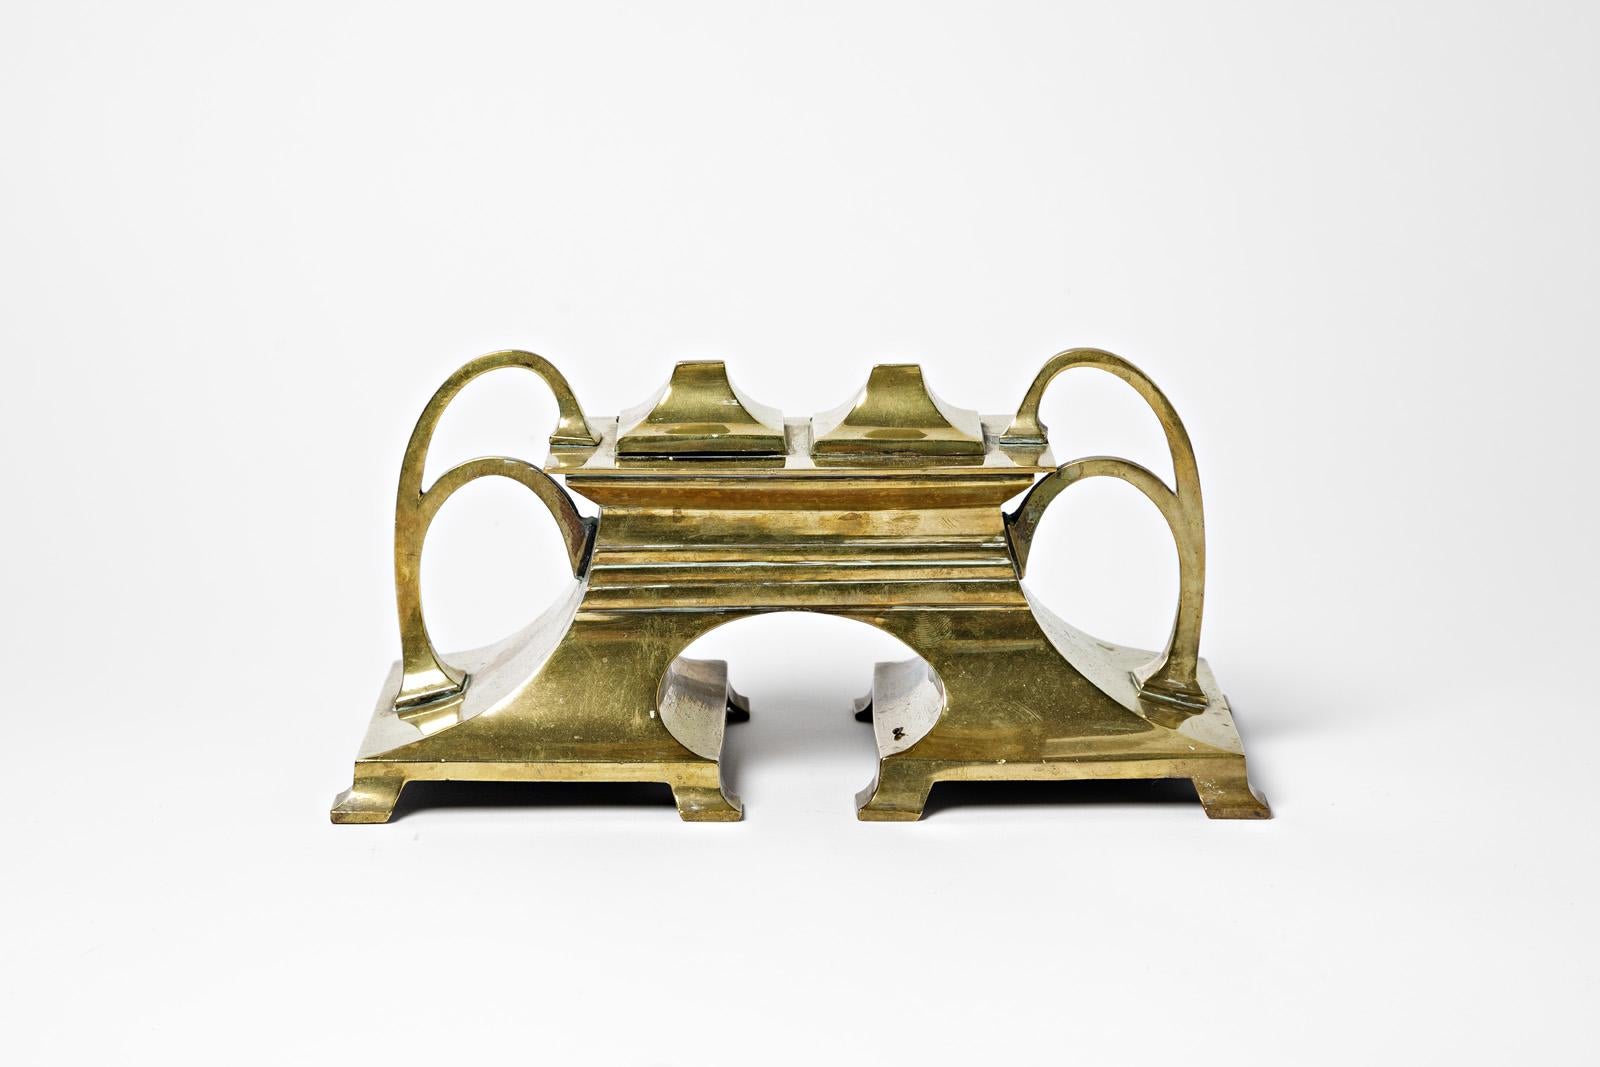 Art Nouveau

Großes Tintenfass aus goldenem Messing im Jugendstil

Original 1900 Schreibtisch-Accessoire

Original guter Zustand

Höhe 13 cm
Groß 25 cm